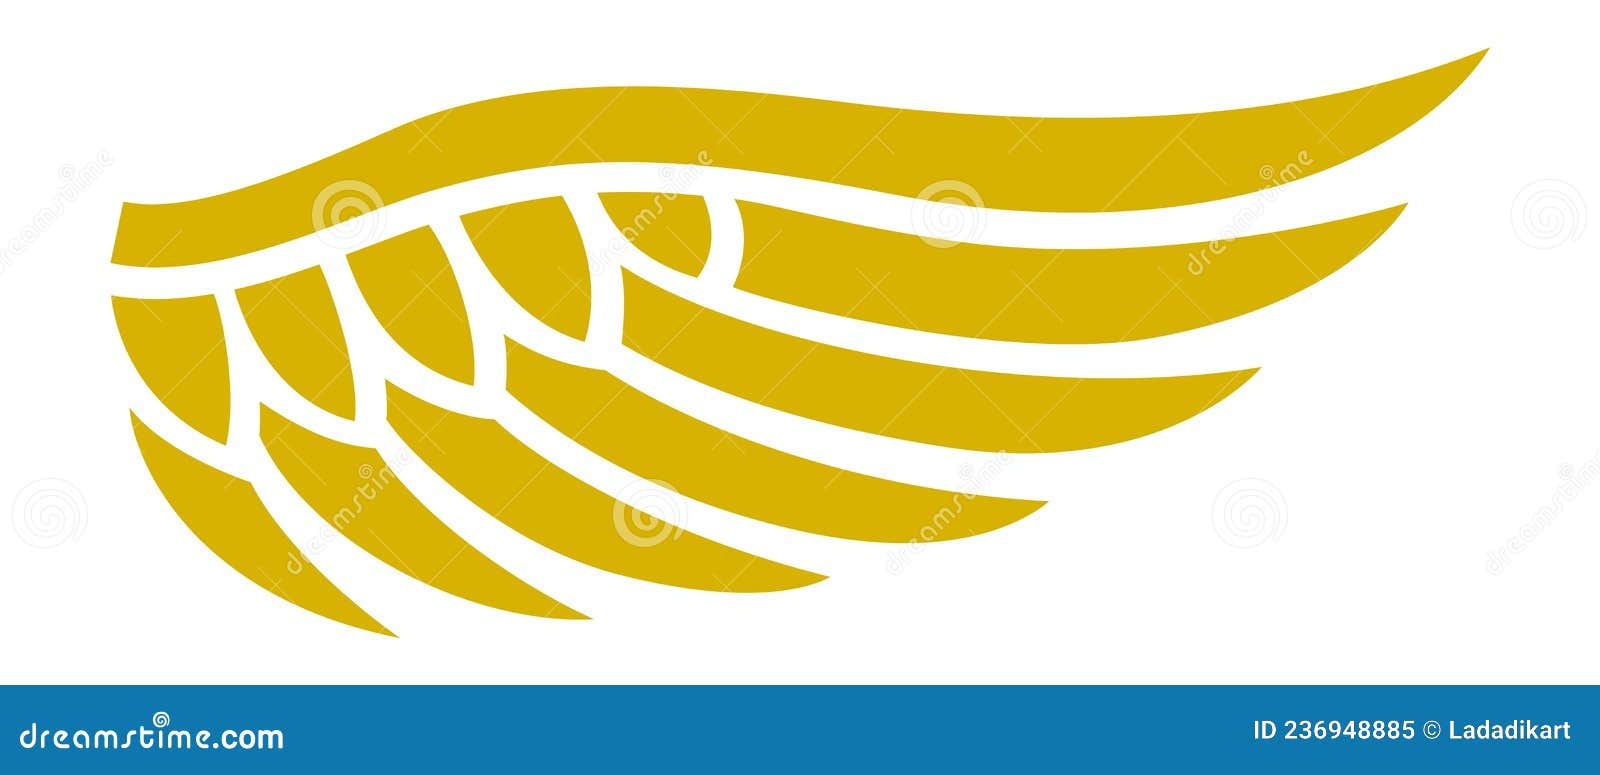 Celtic Wing Symbol. Golden Bird Feathers Stencil Stock Vector ...